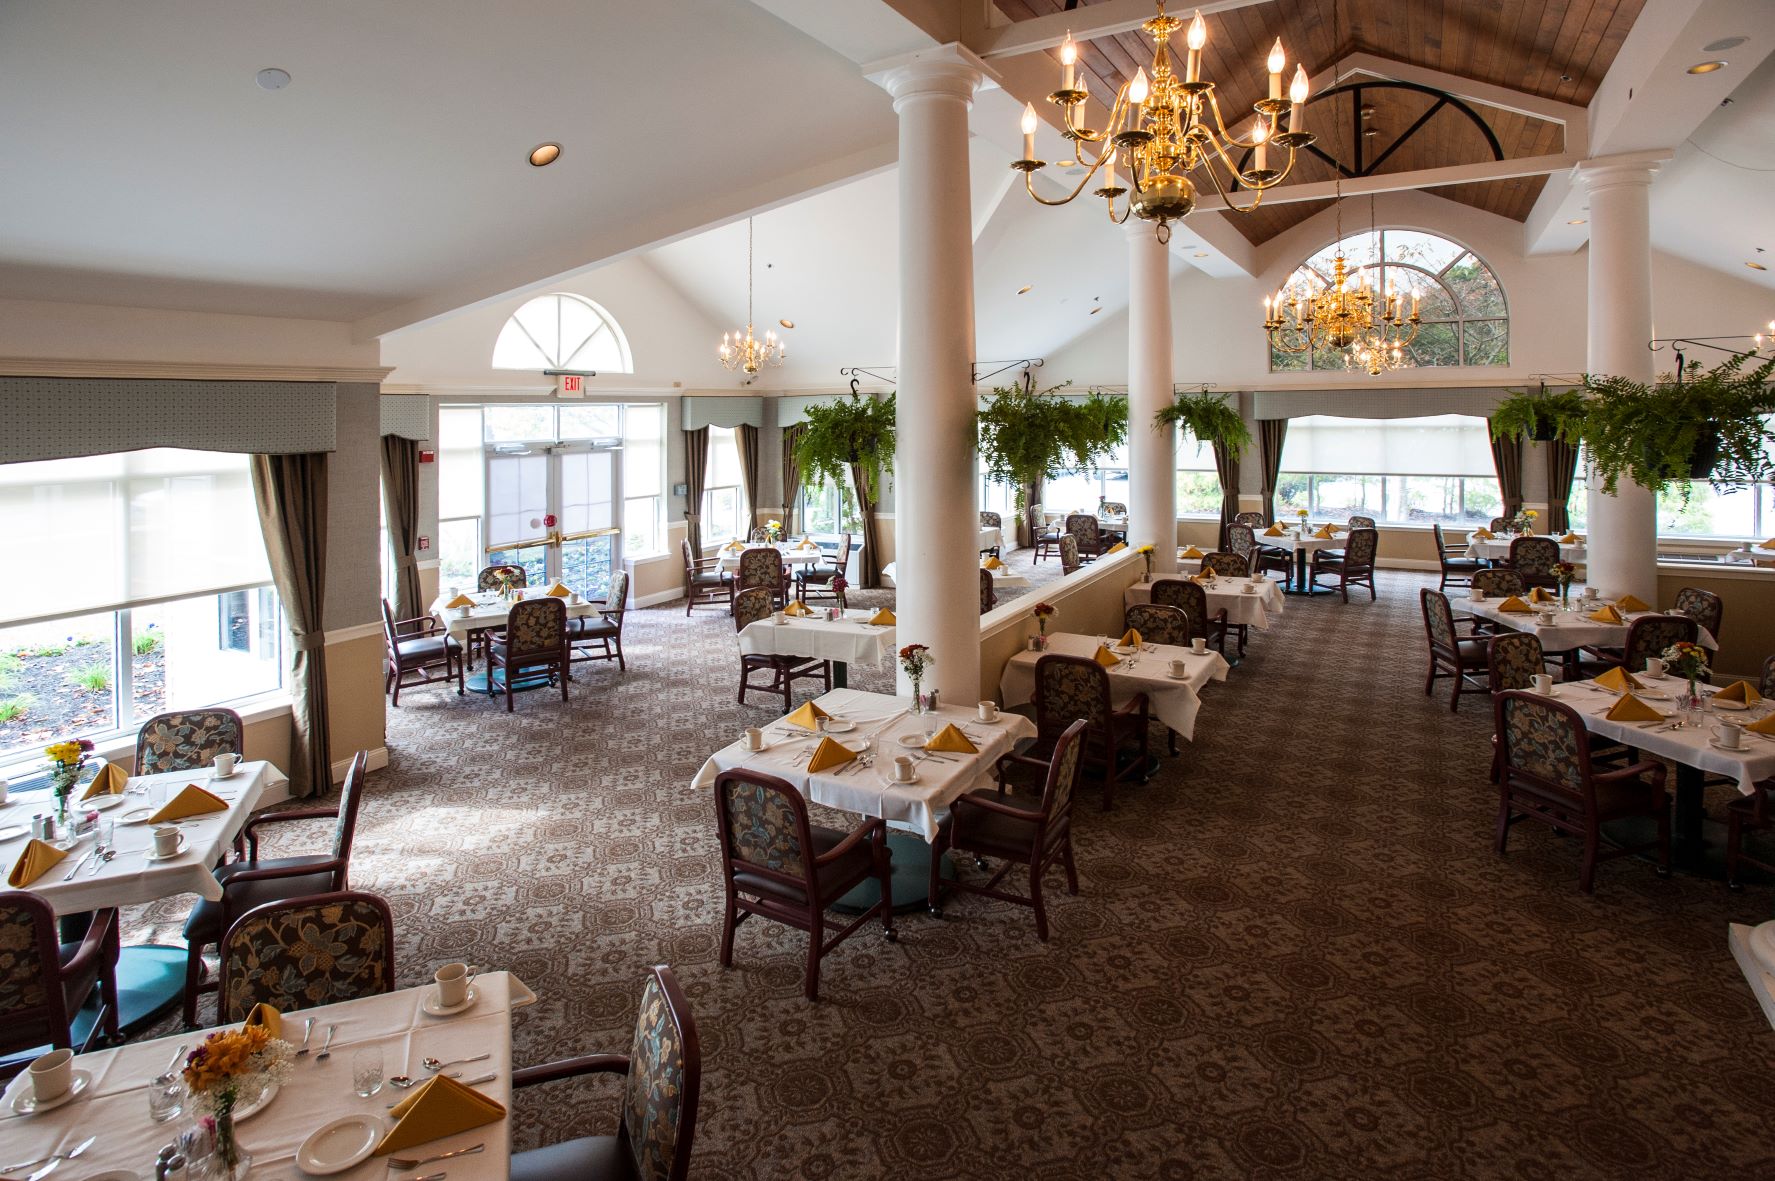 Washington Township Senior Living boasts a spacious dining area for our seniors!